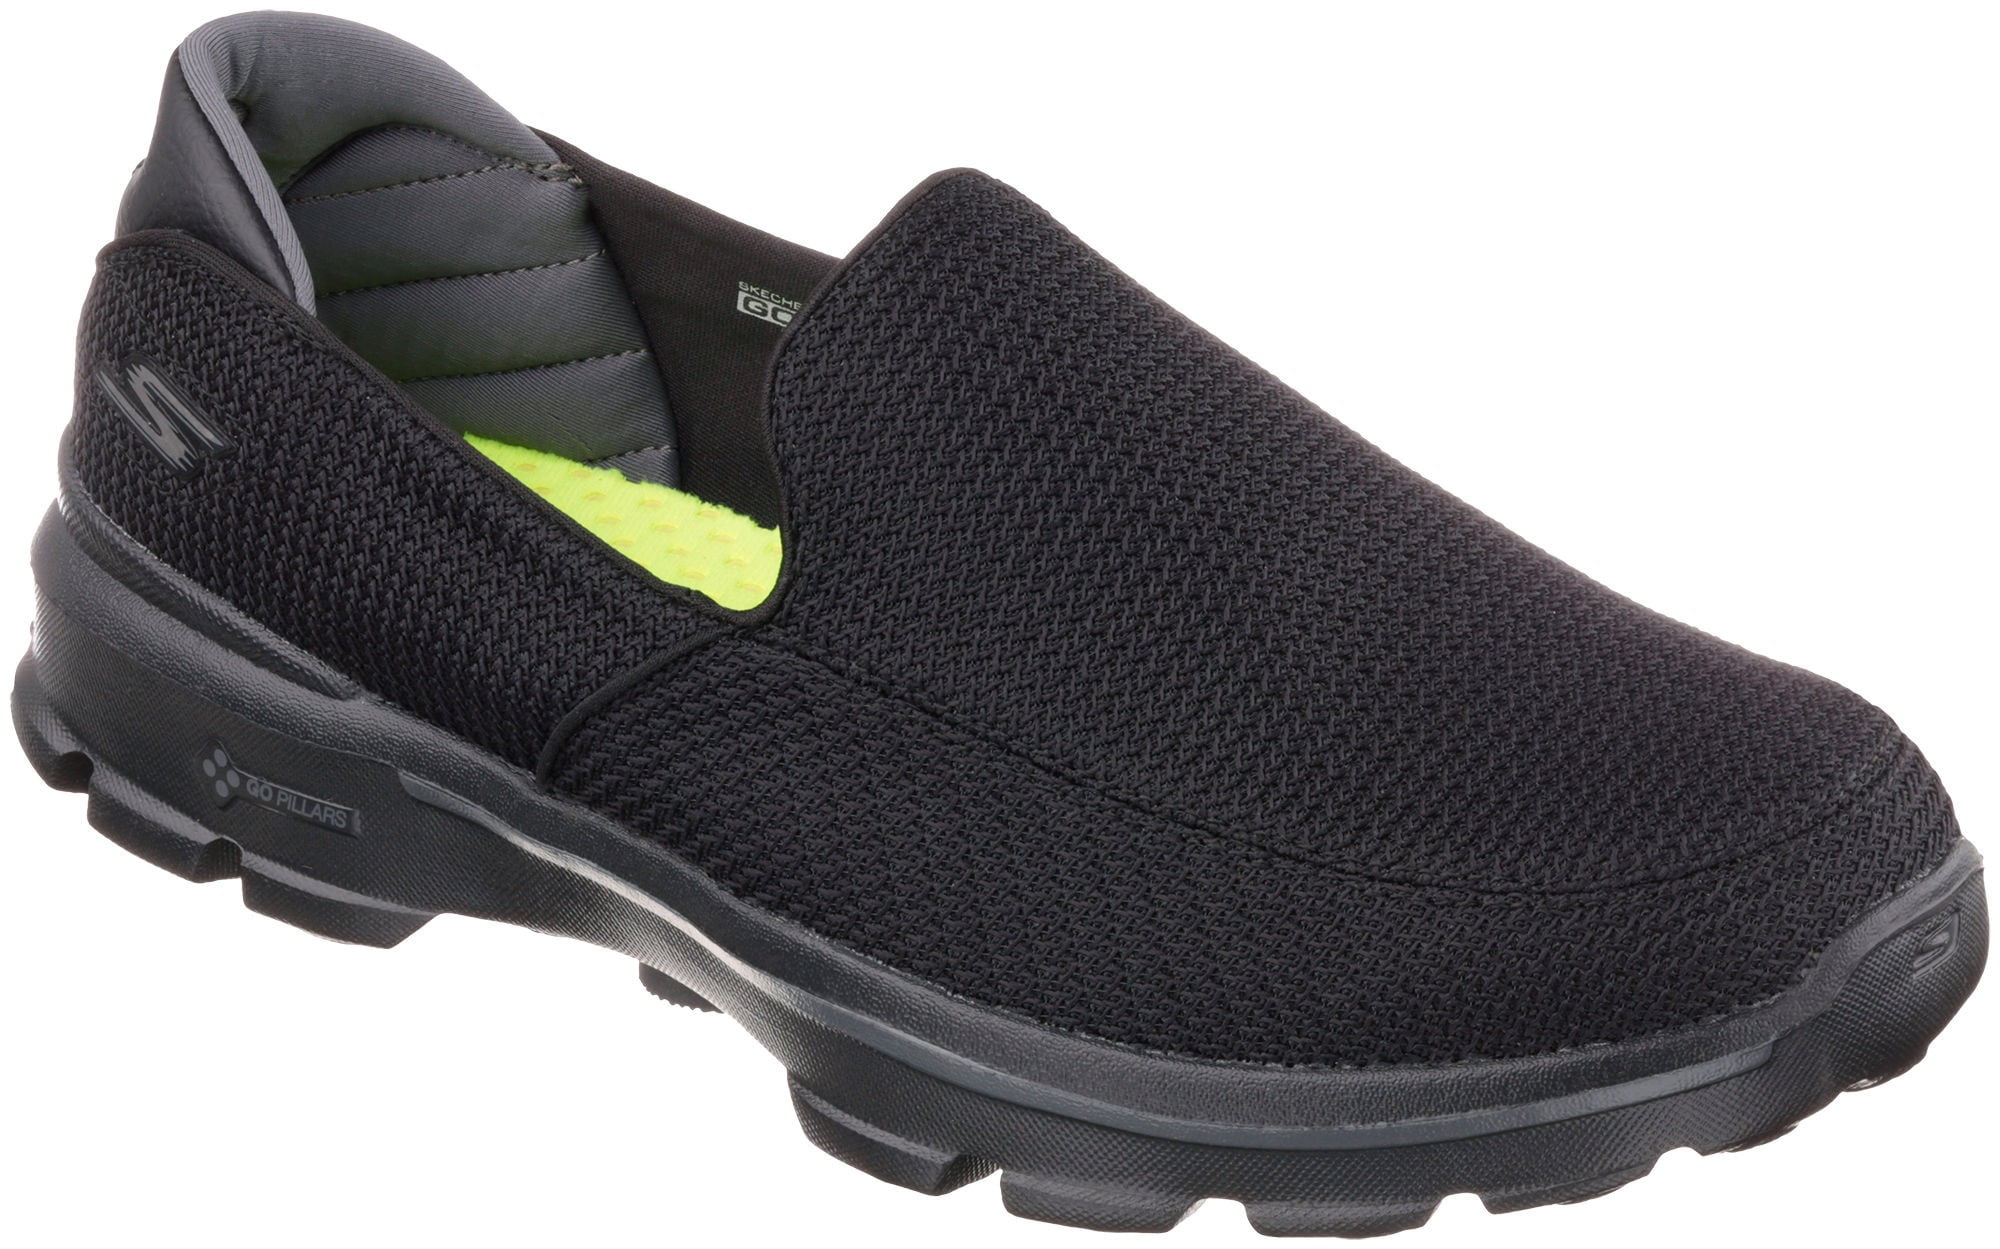 Skechers Performance Men's Go Slip-On Walking Shoe, Black/Grey, 12 M US - Walmart.com